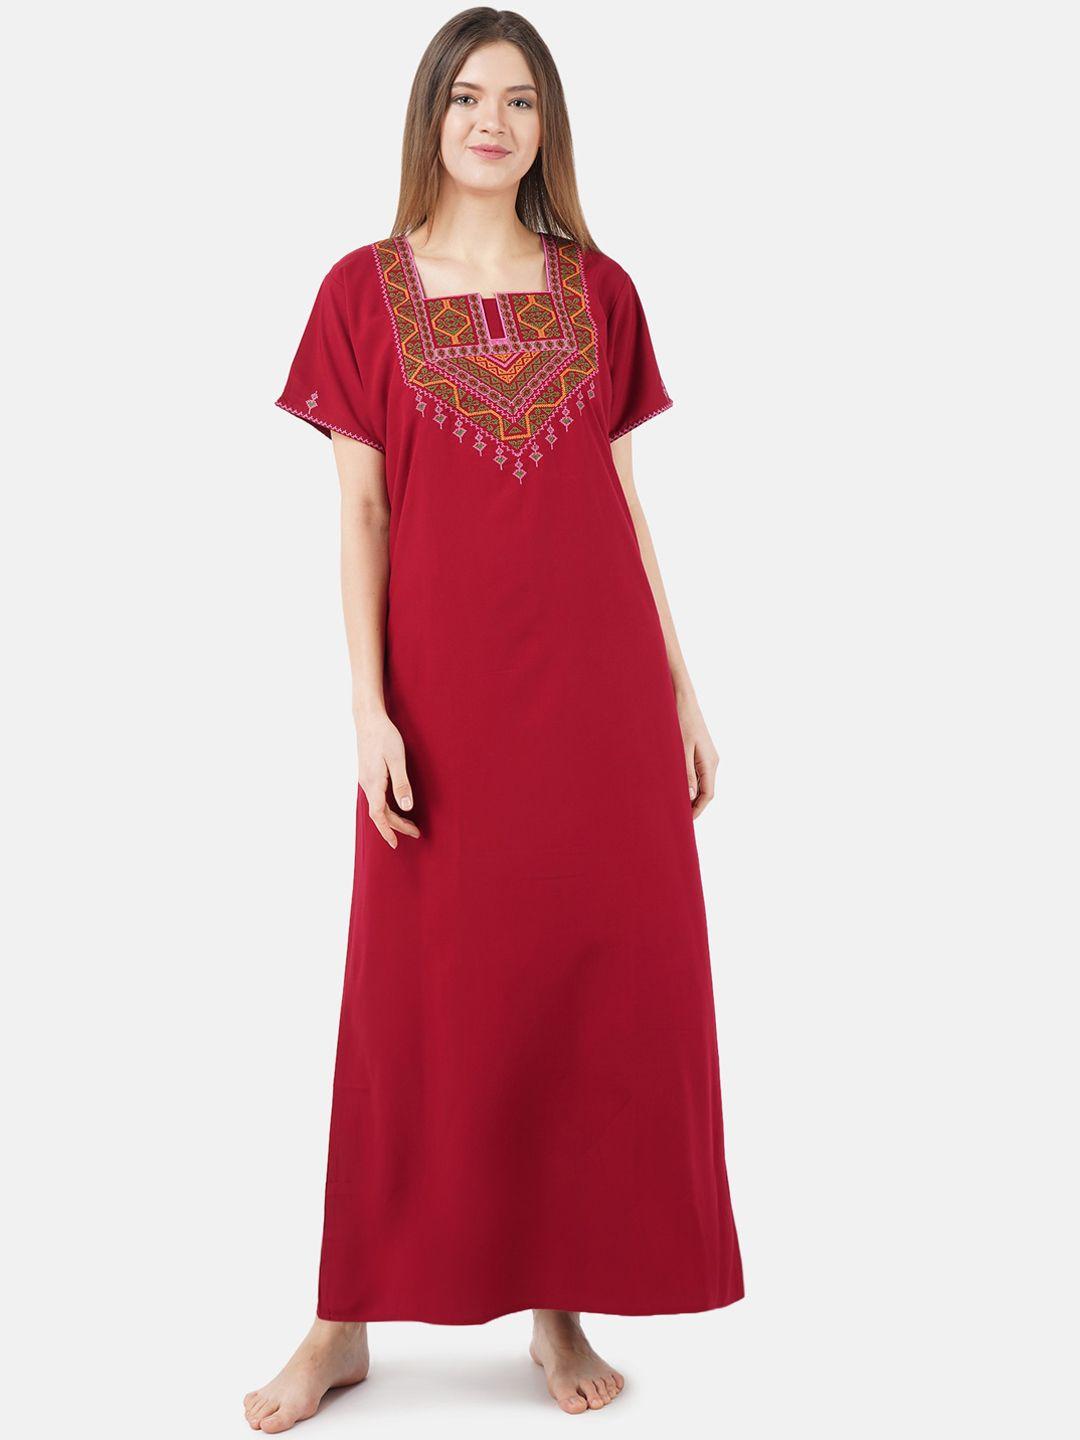 koi-sleepwear-maroon-embroidered-nightdress